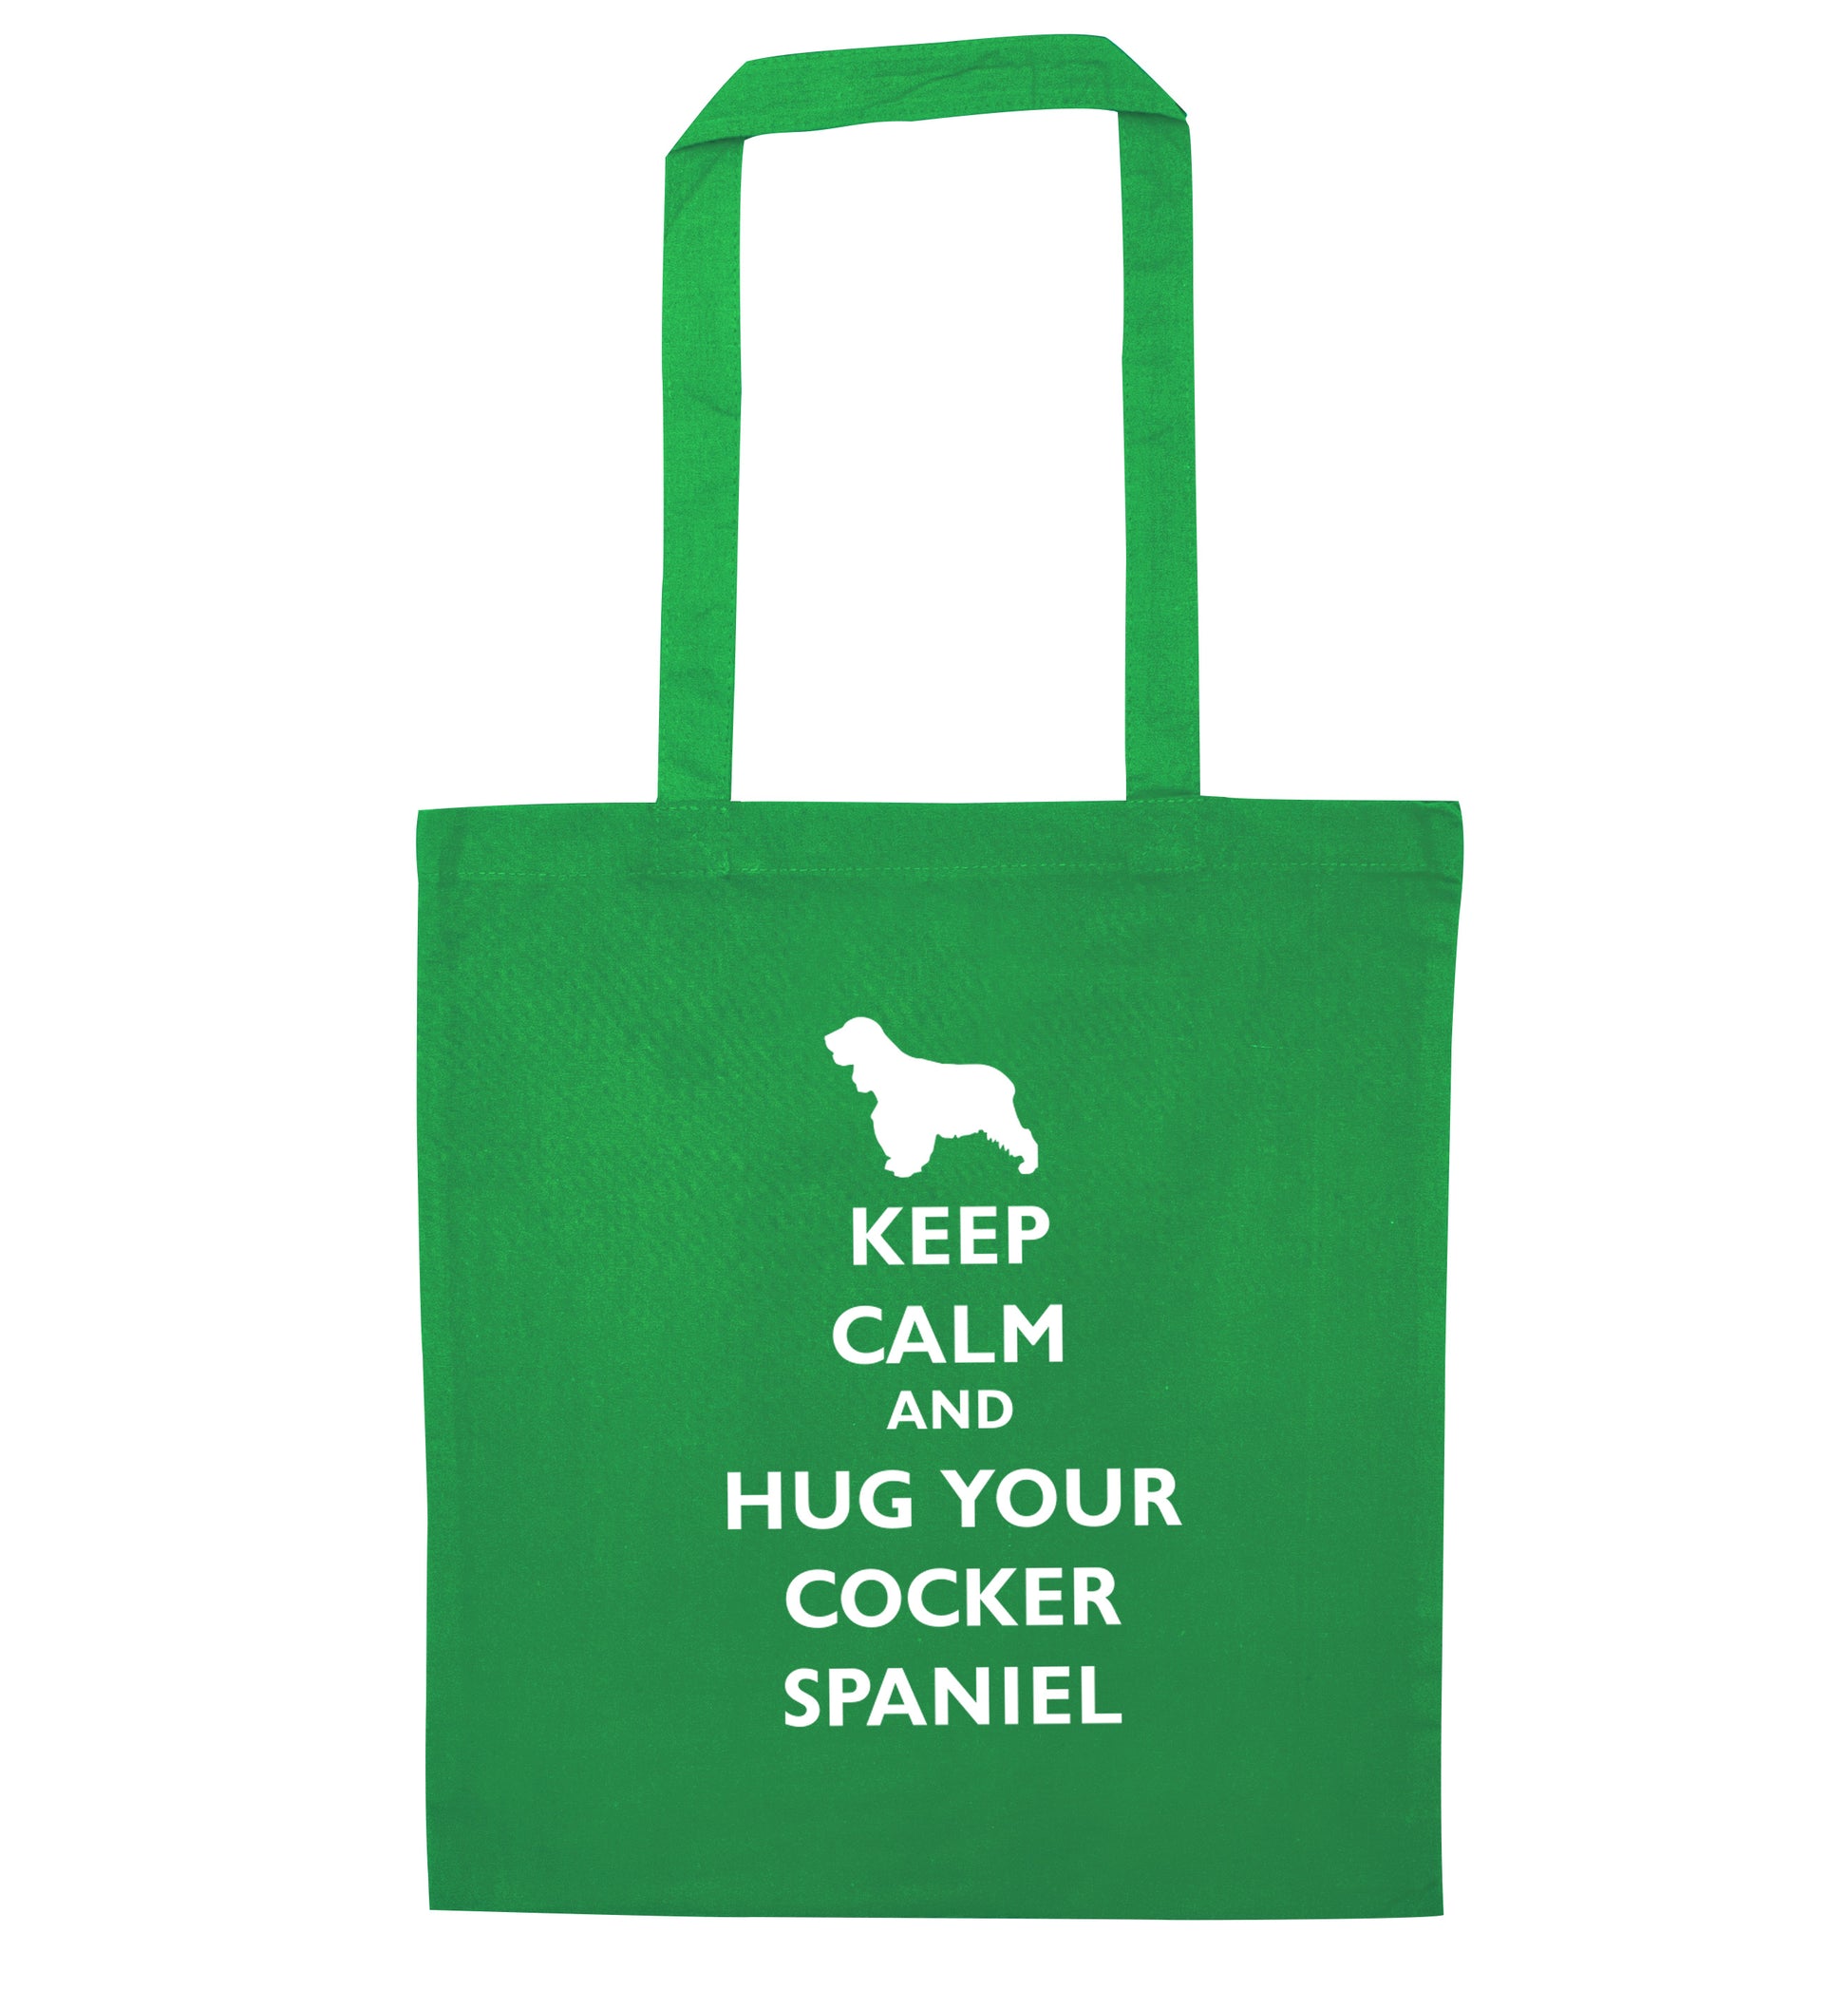 Keep calm and hug your cocker spaniel green tote bag